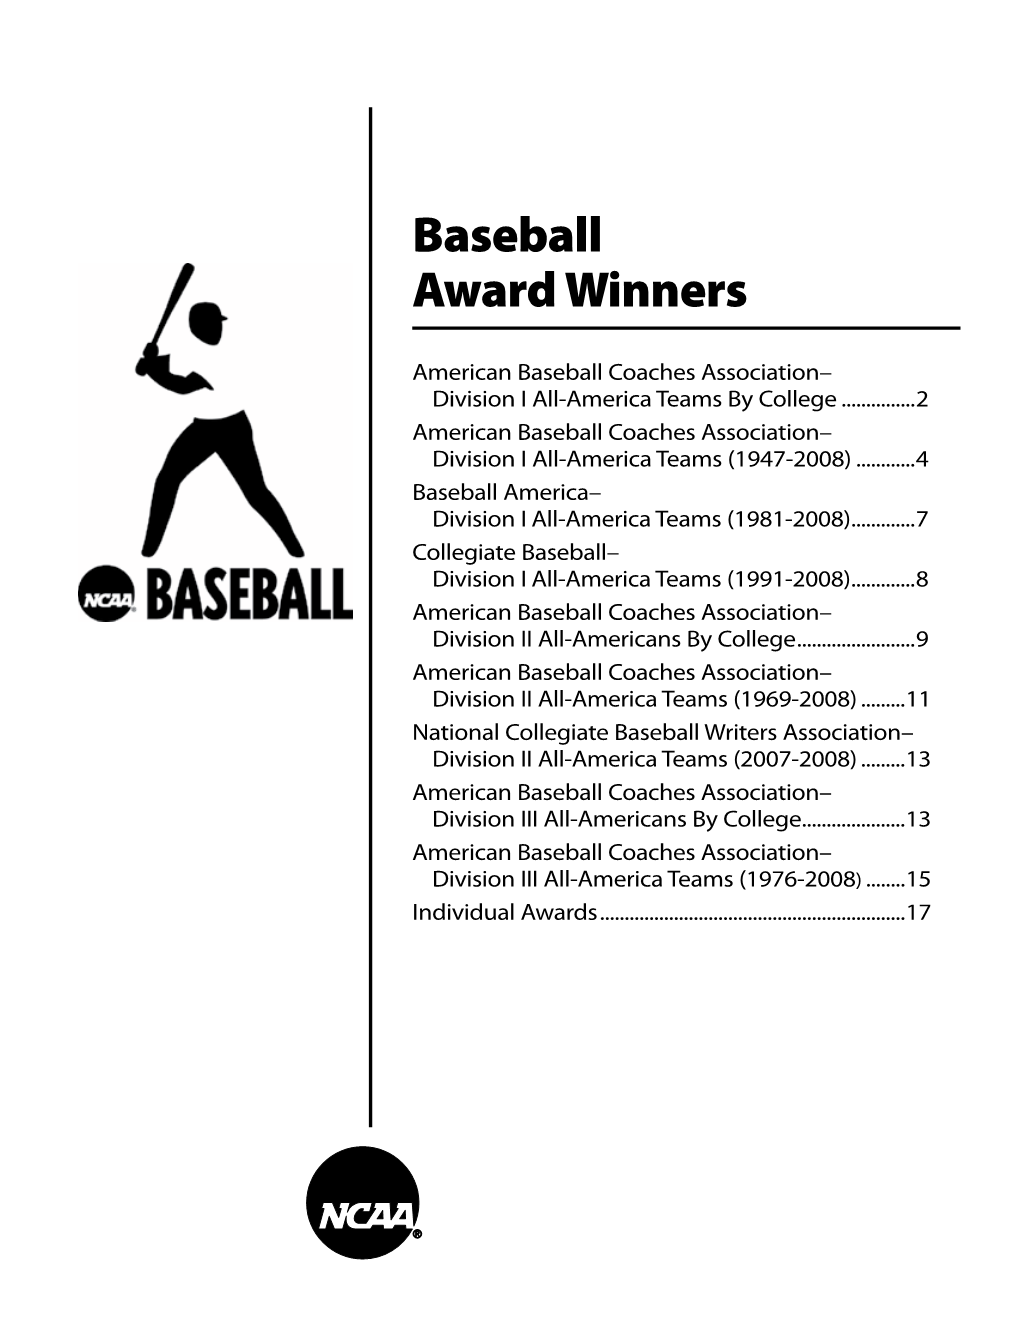 Baseball Award Winners